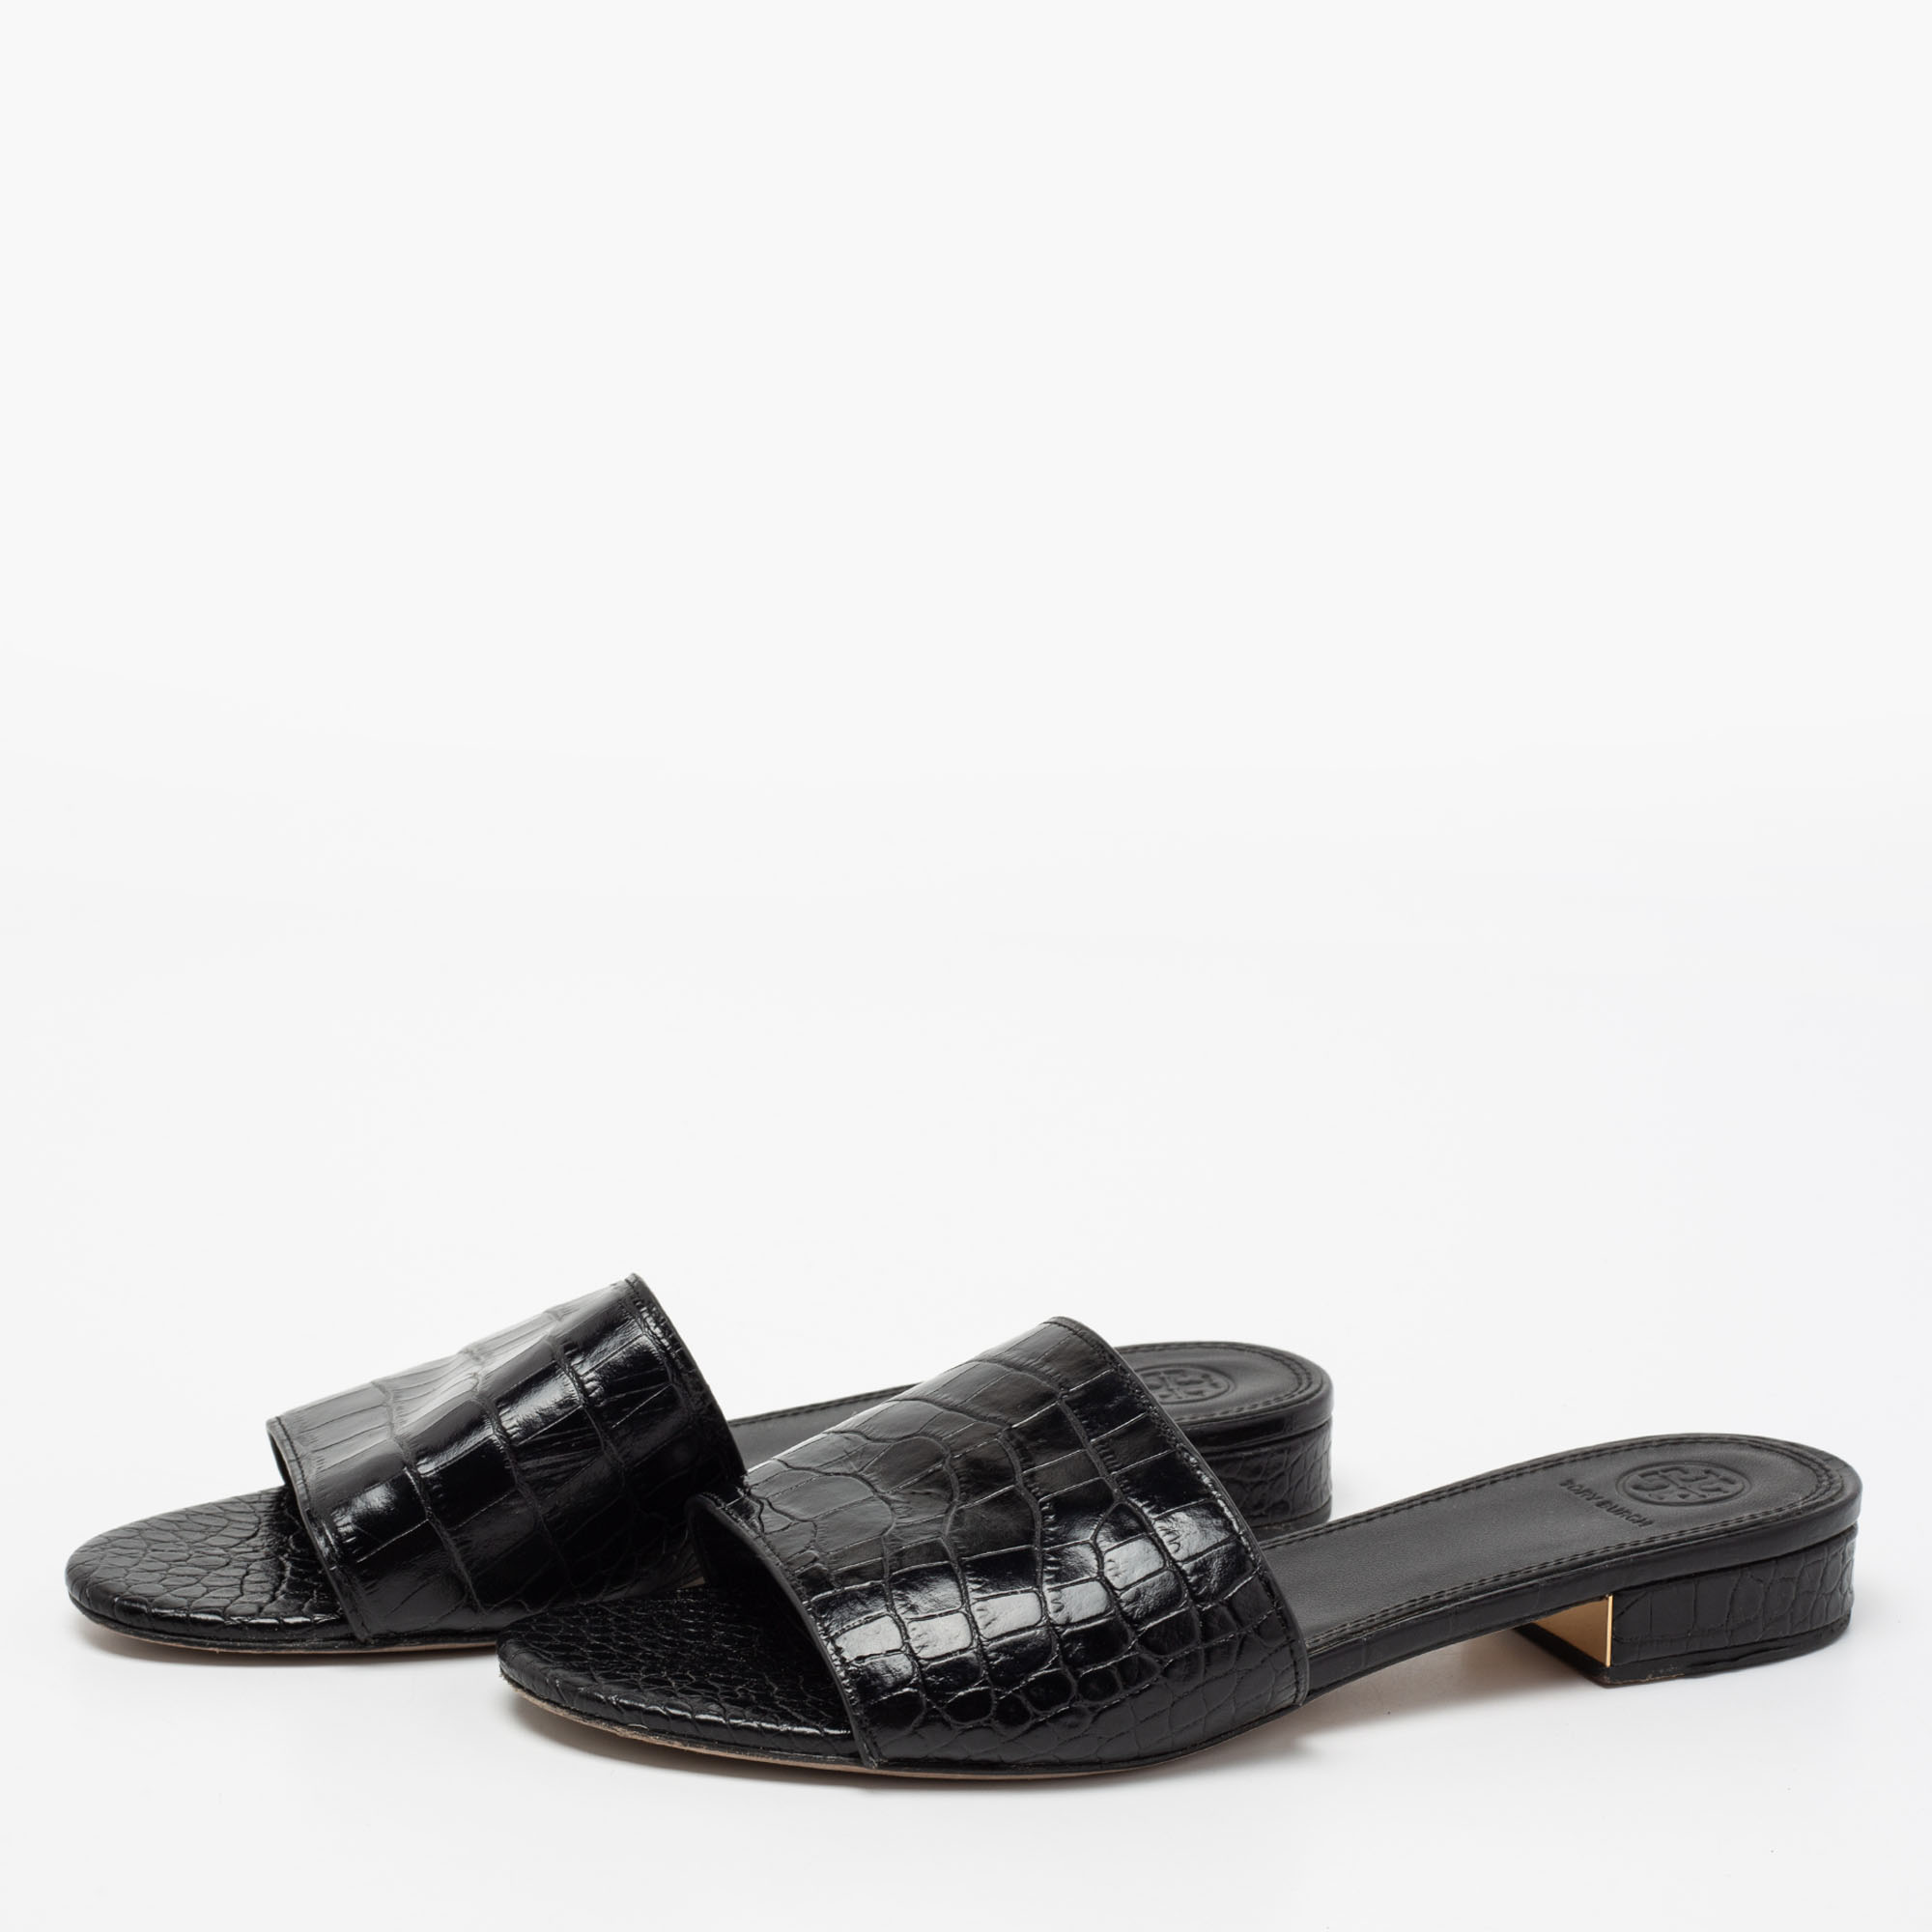 

Tory Burch Black Croc Embossed Leather Flat Slide Sandals Size